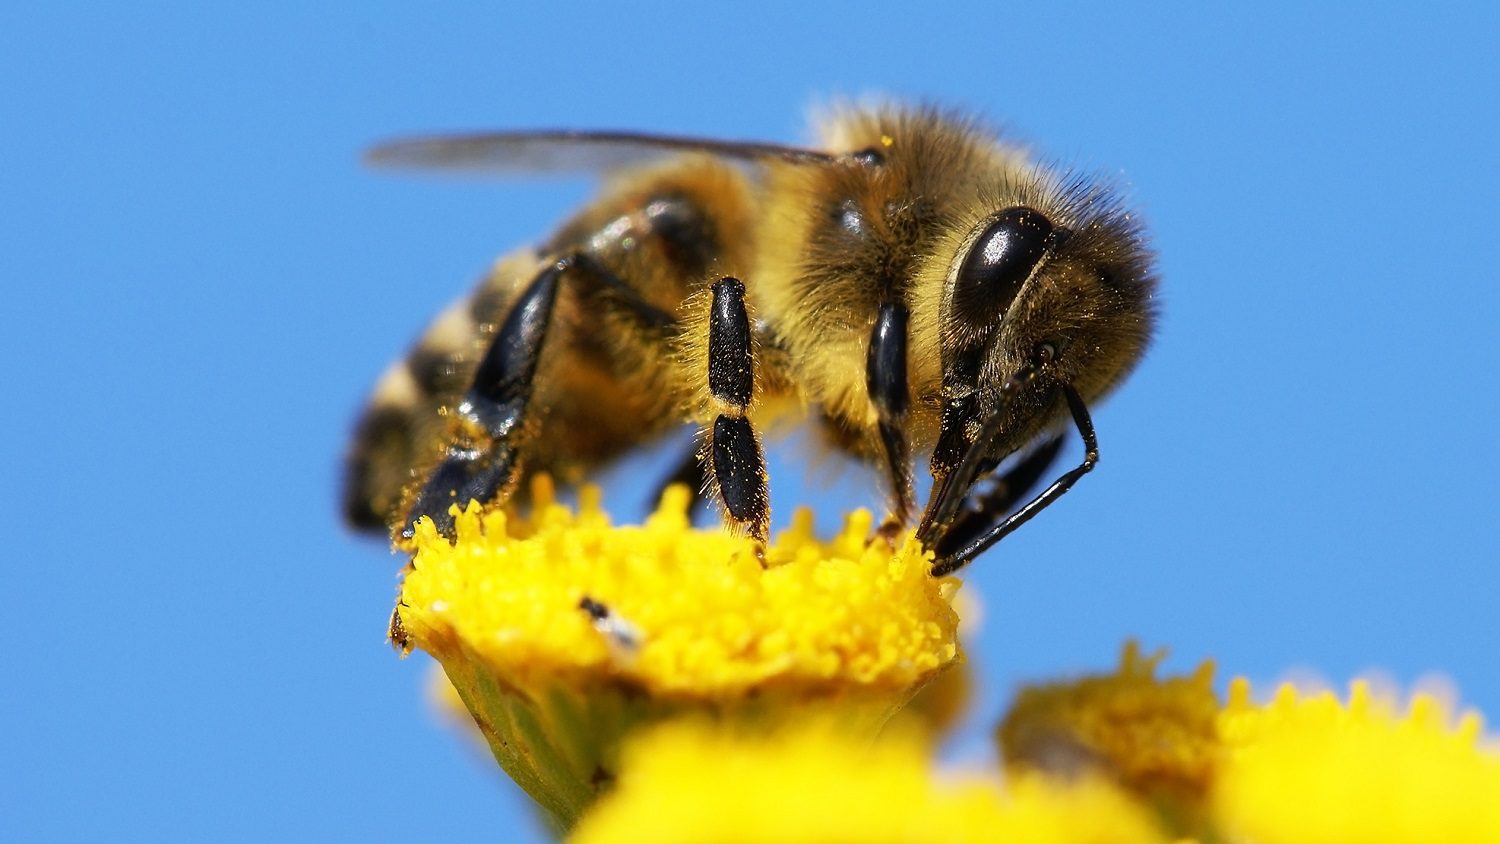 Closeup of a Honeybee on a yellow flower: Photo 13931638 / Honeybee Closeup © Daniel Prudek | Dreamstime.com